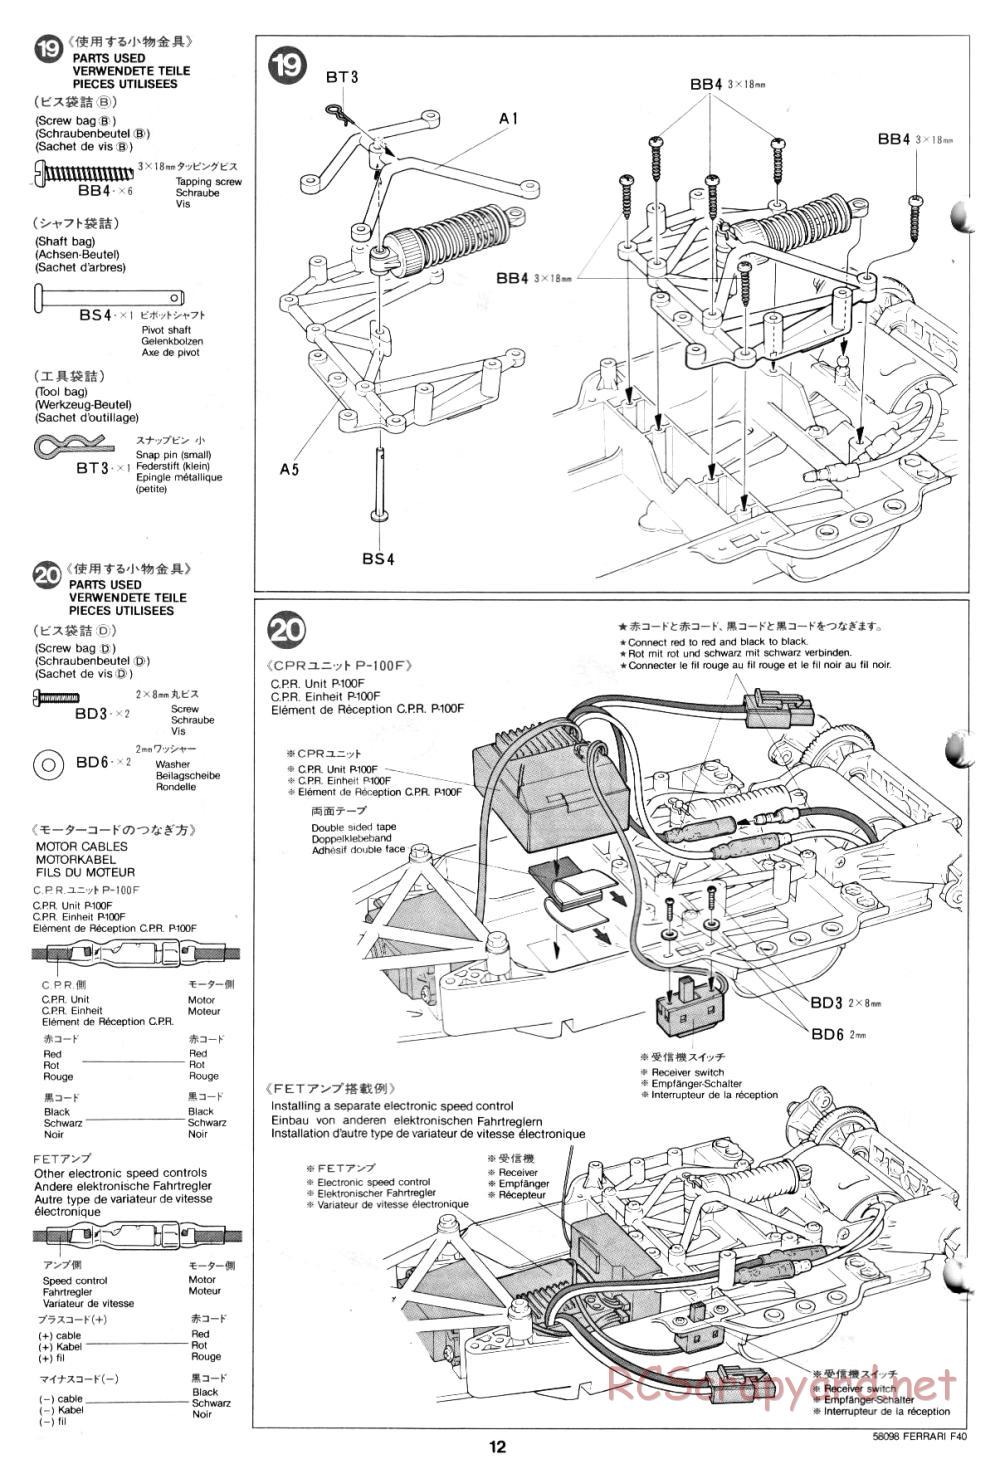 Tamiya - Ferrari F40 - 58098 - Manual - Page 12